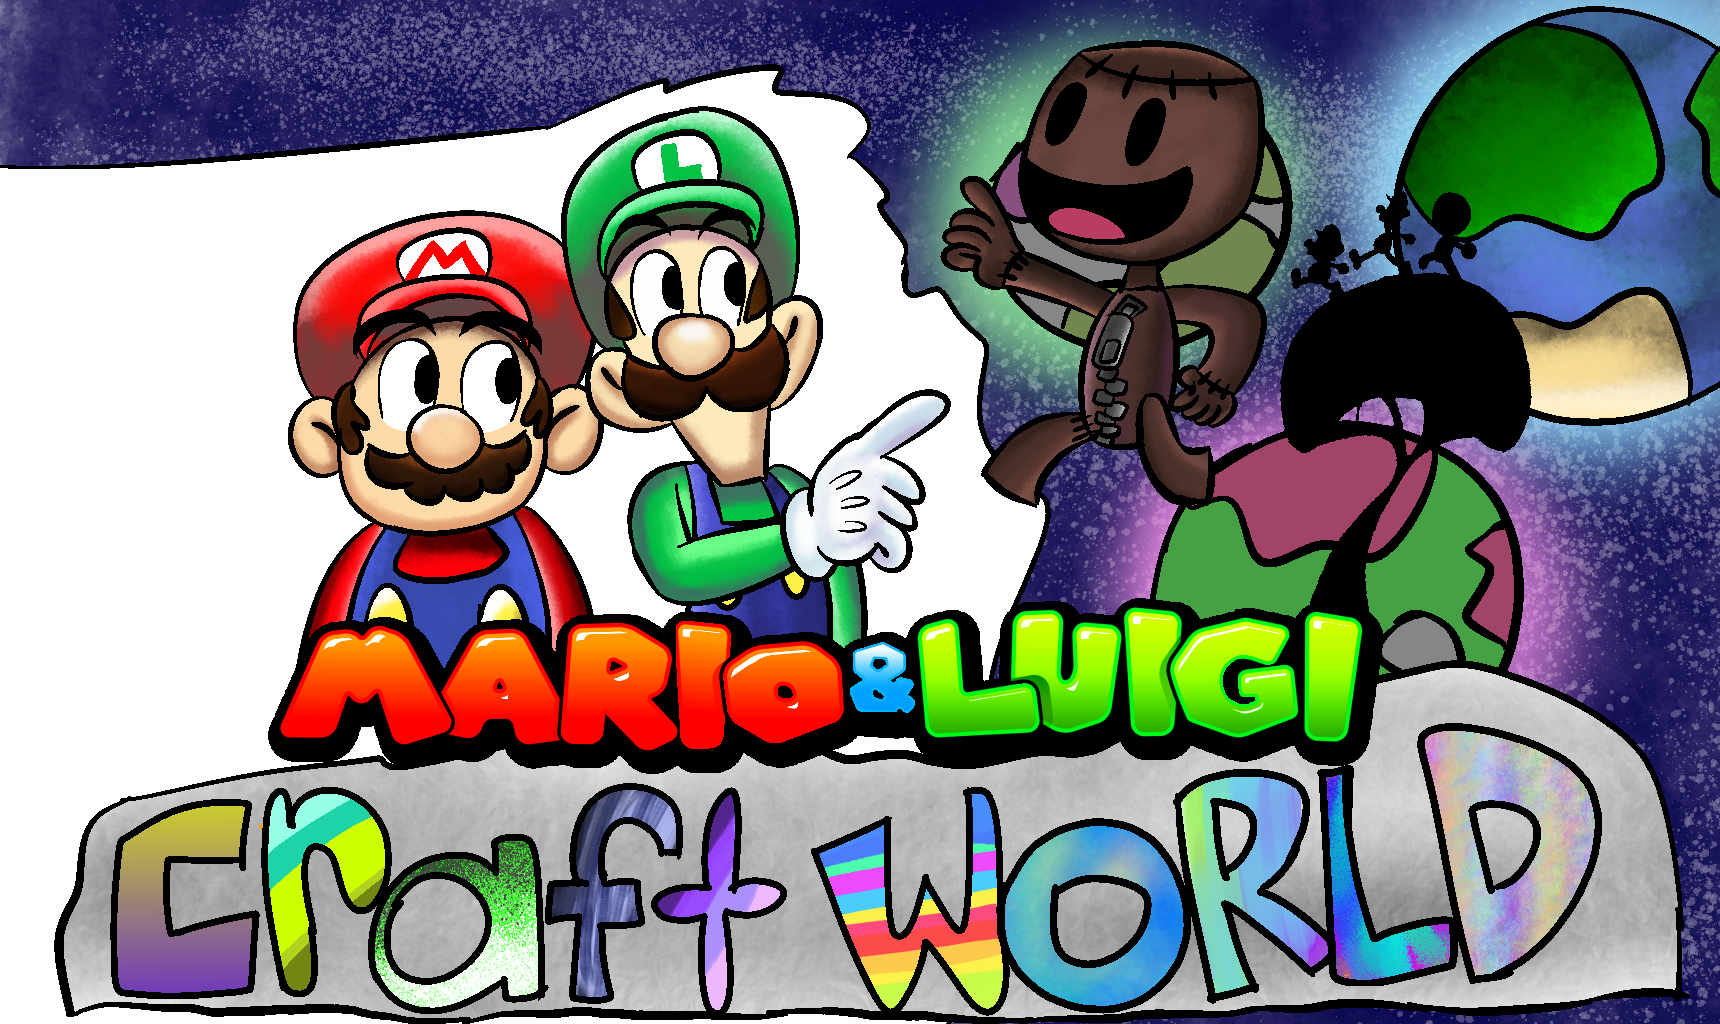 Mario + Luigi: Craft World by BoredRabbit on DeviantArt